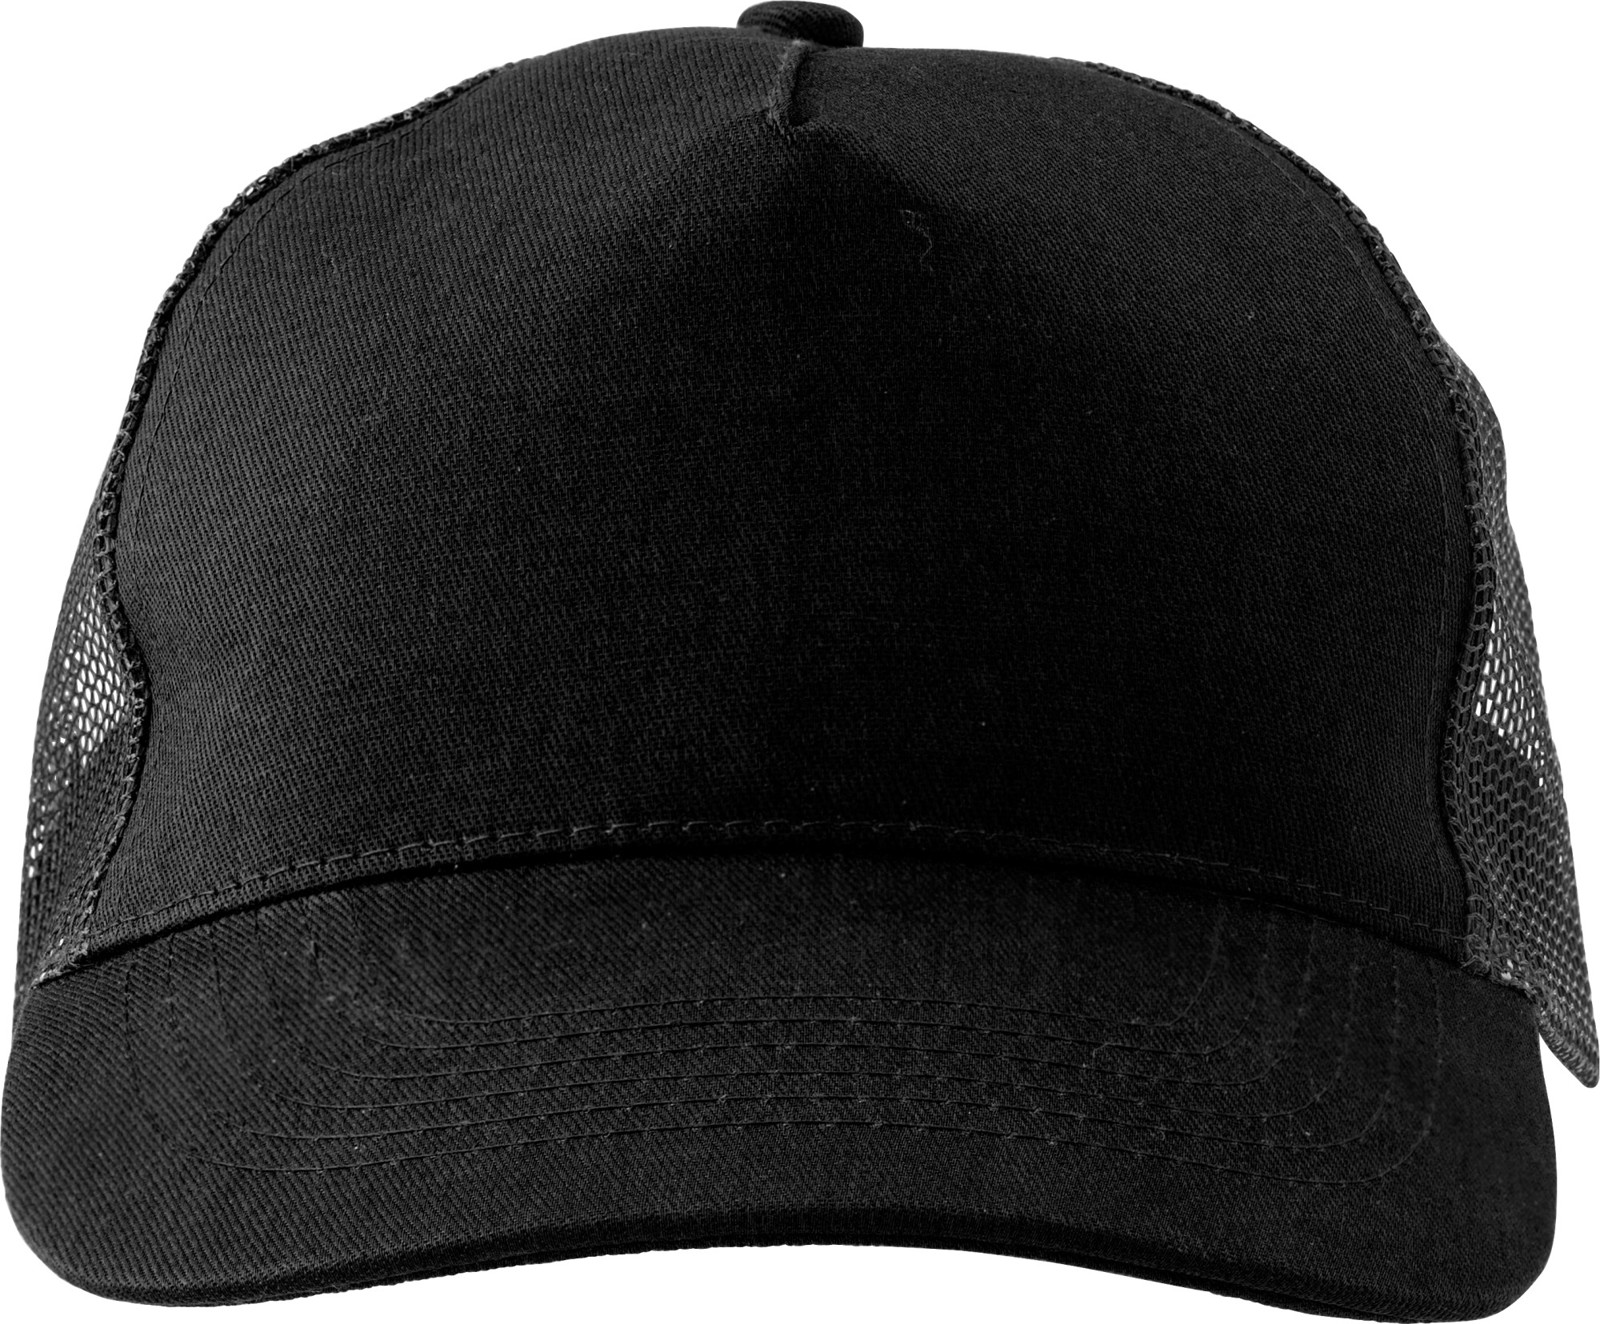 Cotton twill and plastic cap - Black